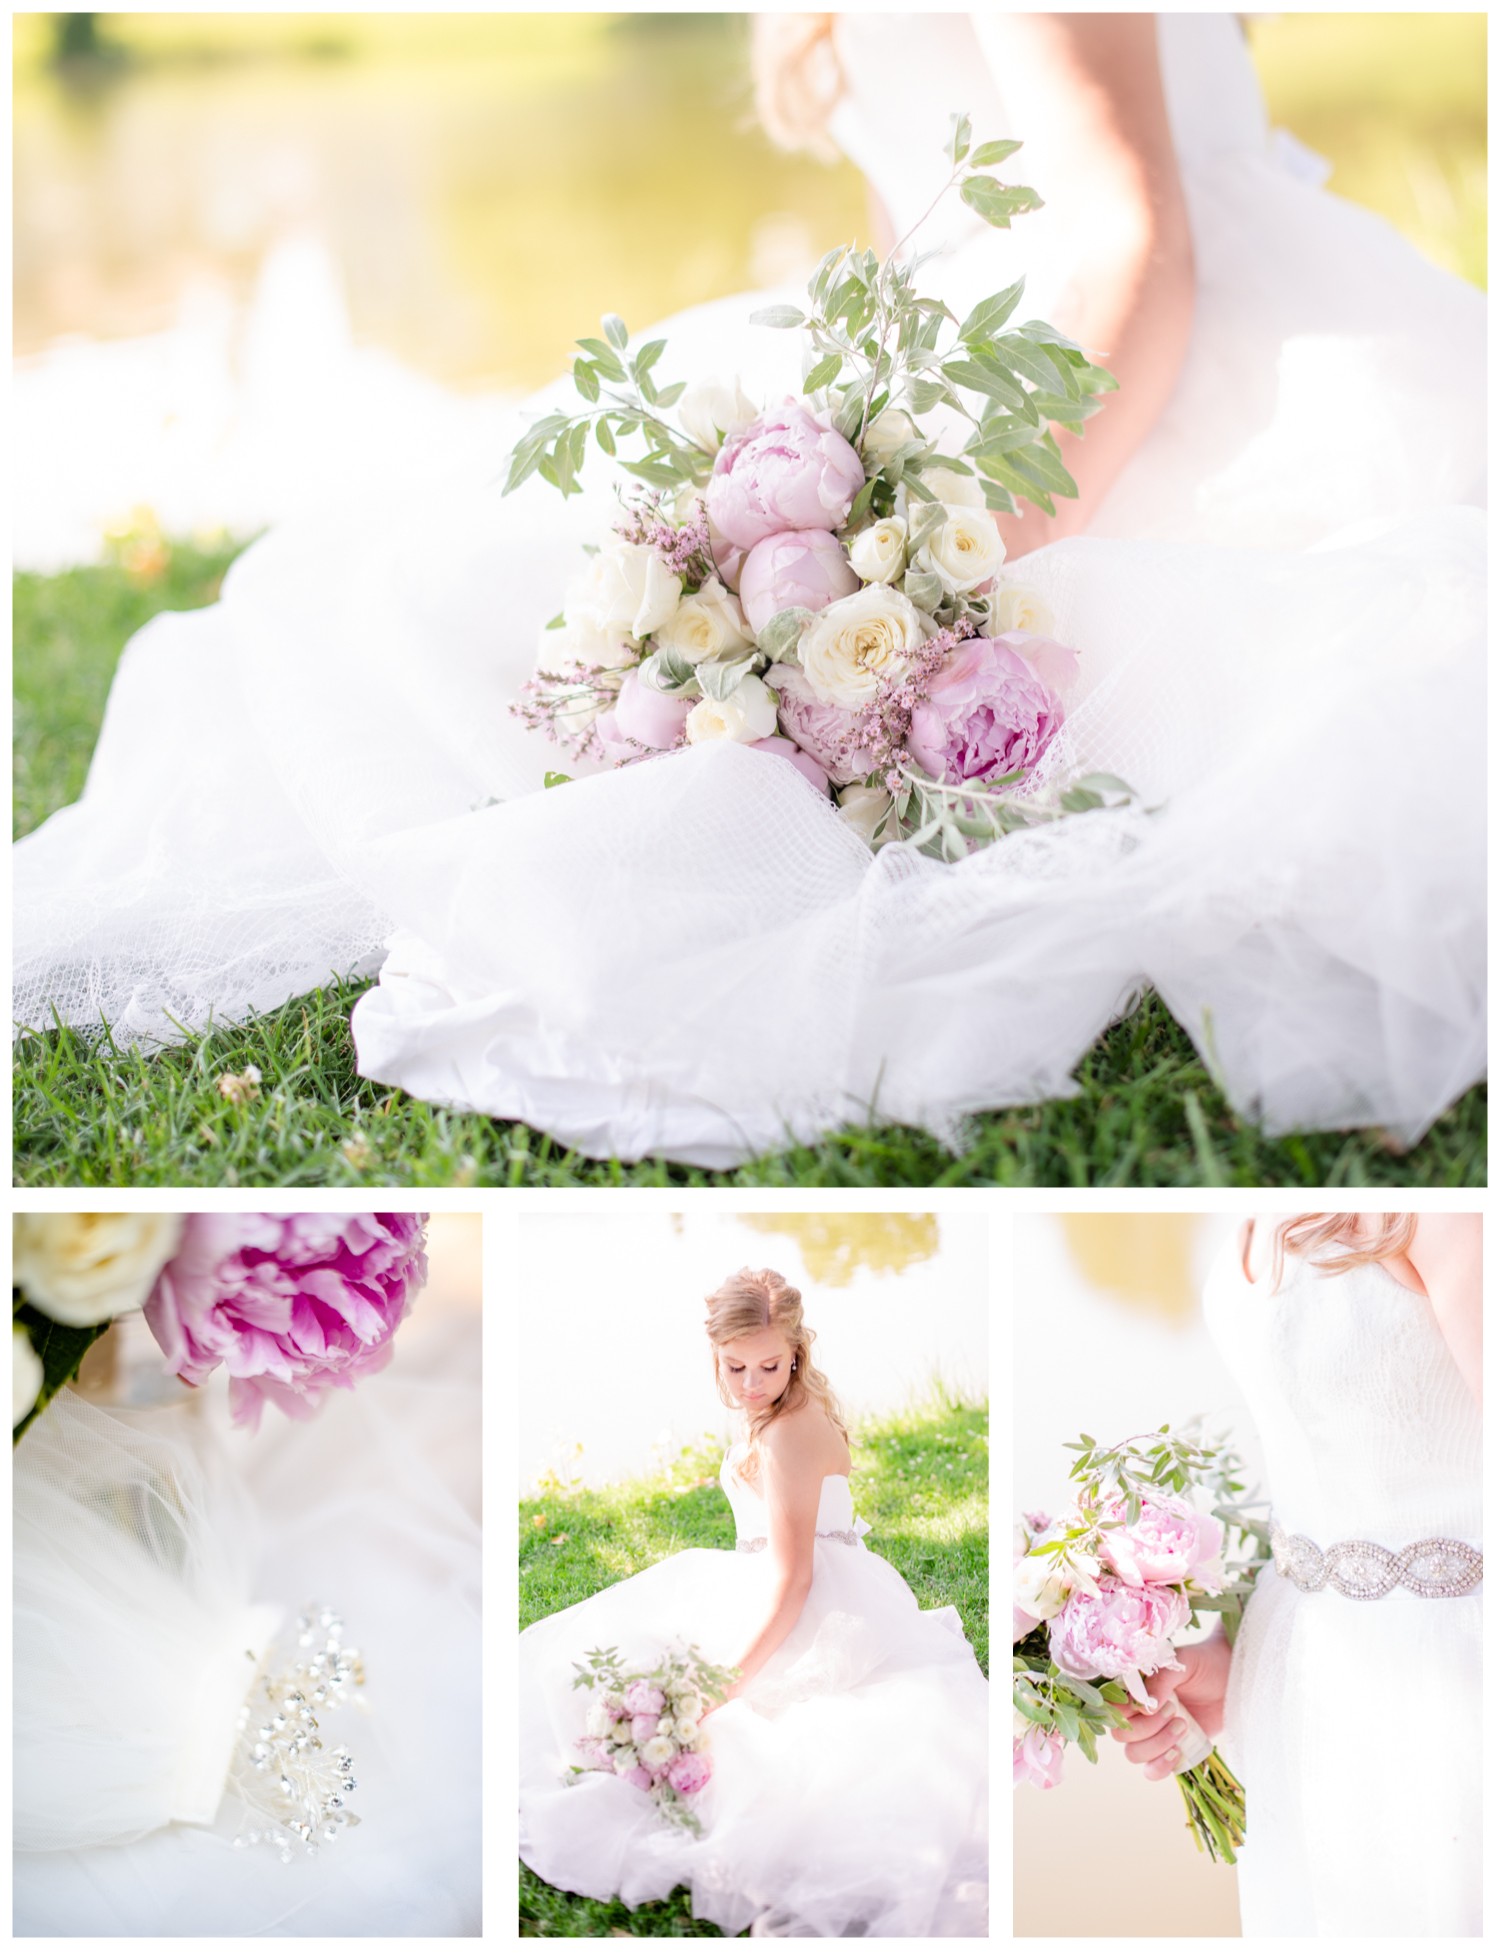 Bridal Portraits by lake | Greeley Armory Wedding - Britni Girard Photography - Colorado Wedding and Lifestyle Photography